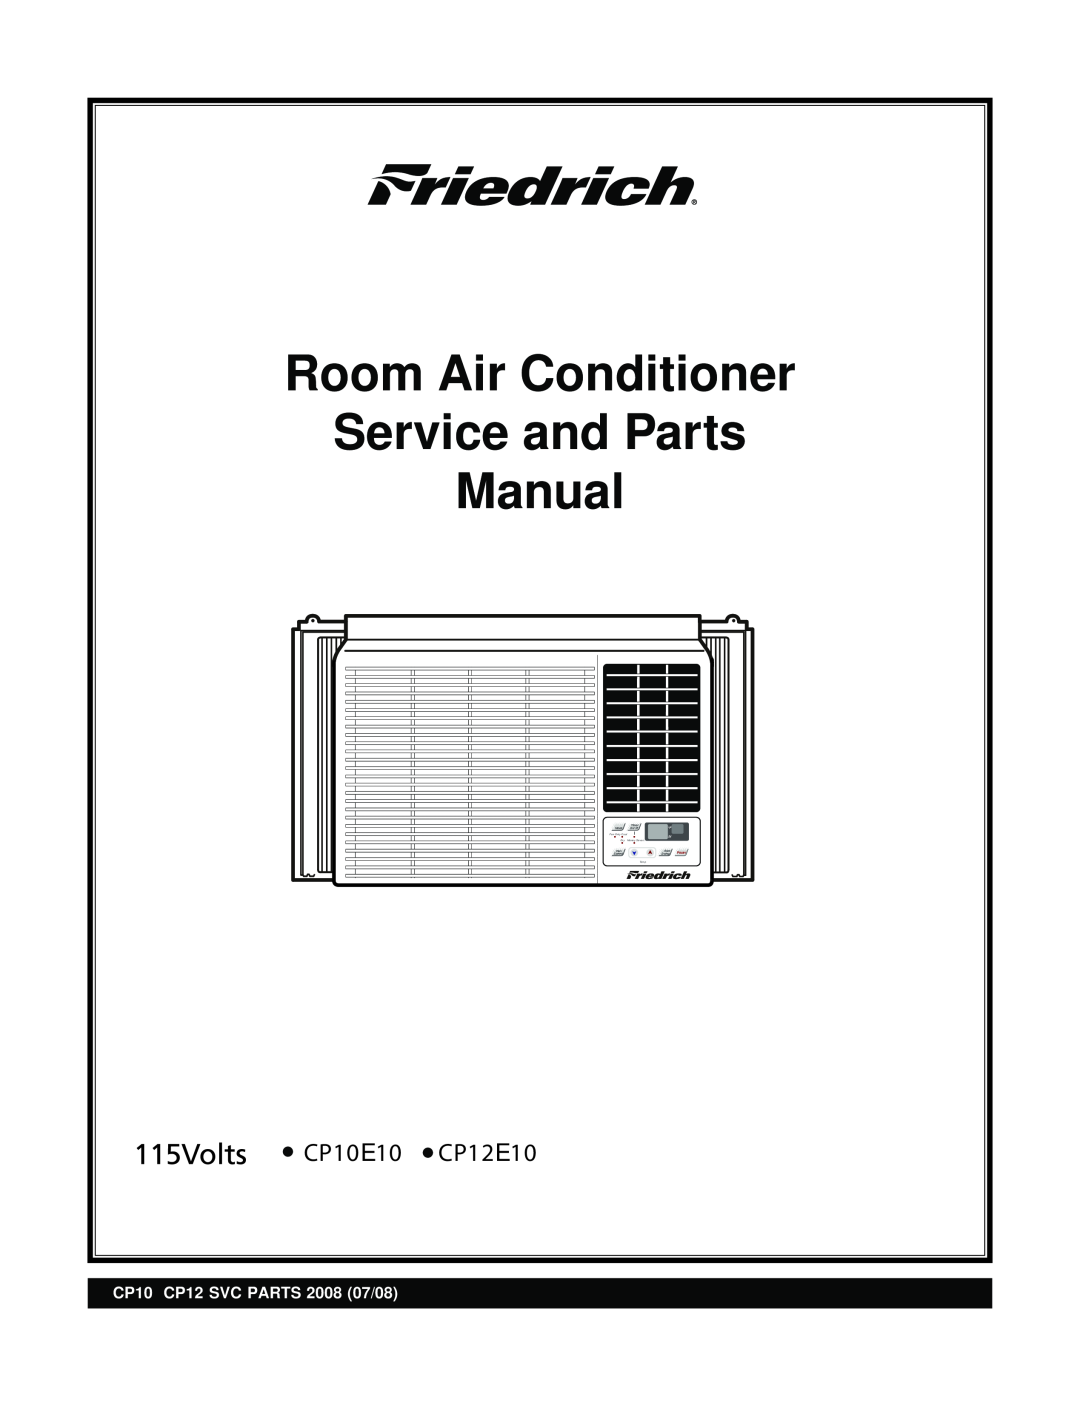 Friedrich manual Room Air Conditioner Service and Parts Manual, CP10E10 CP12E10, CP10 CP12 SVC PARTS 2008 07/08, Mode 